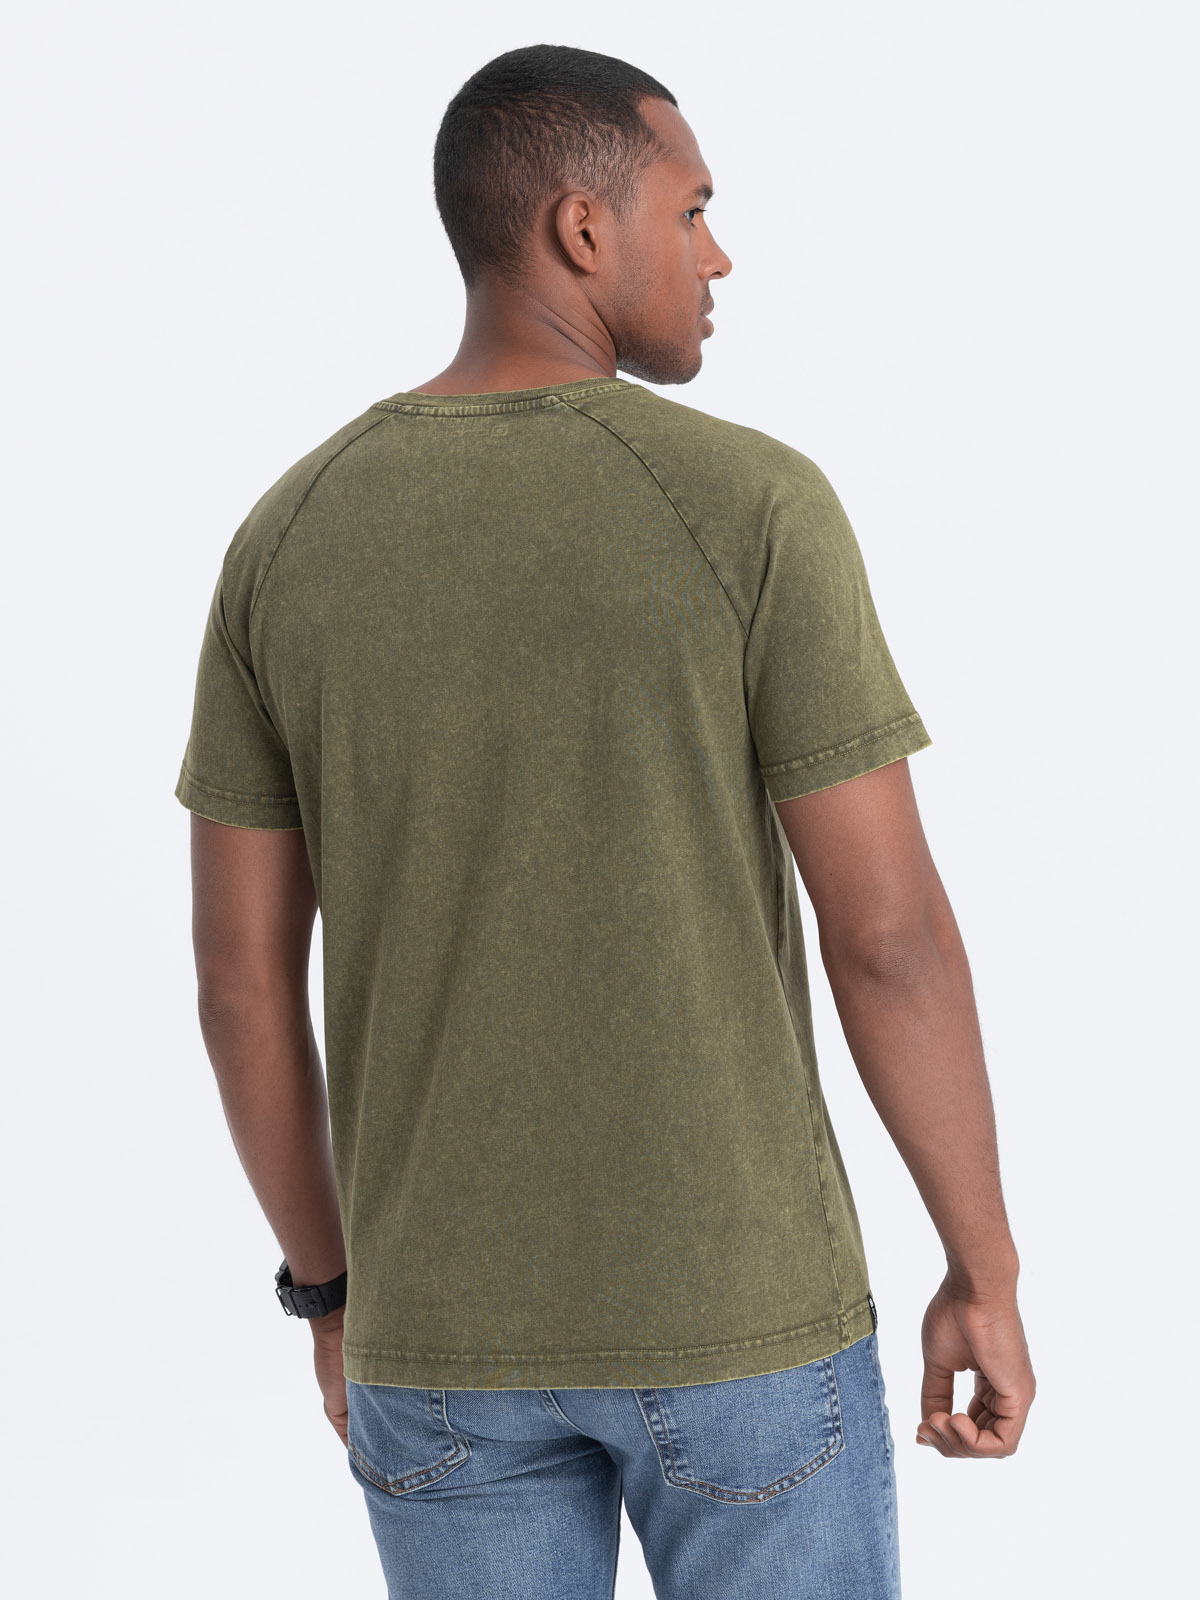 Men\'s dark V4 | clothing Ombre.com T-shirt online S1757 neckline henley Men\'s with - - olive